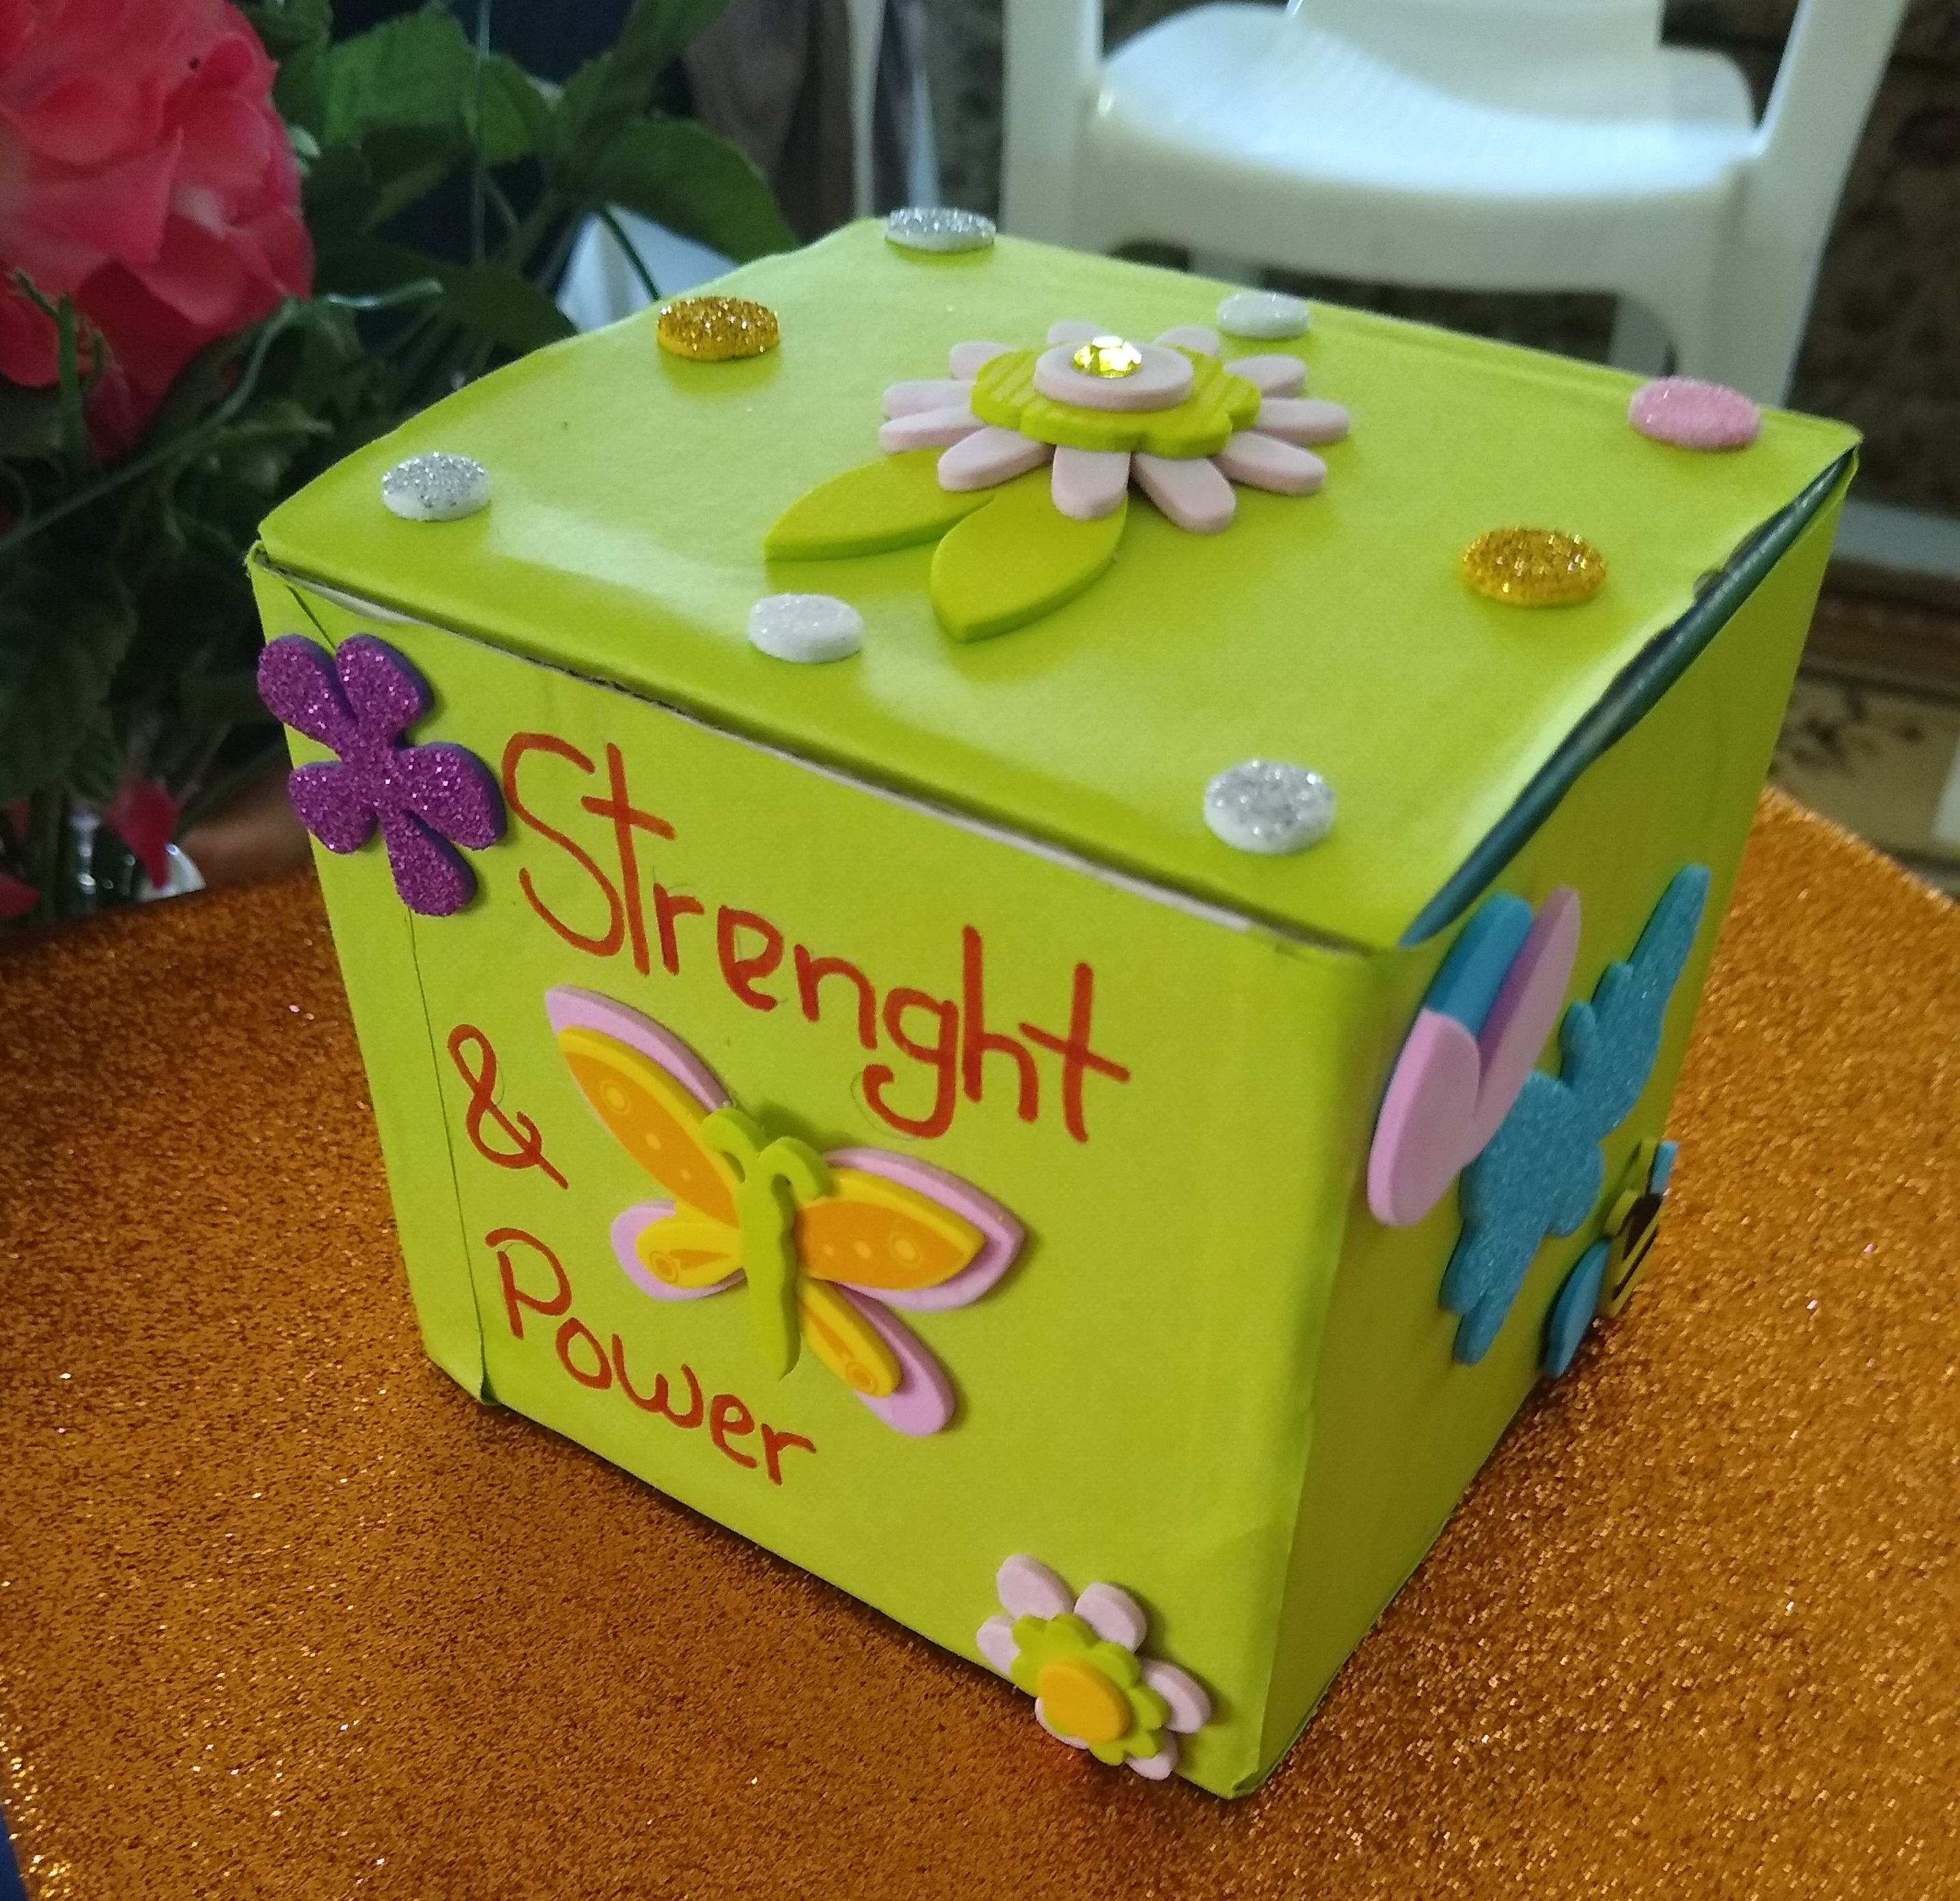 Box saying "Strength" written on it.